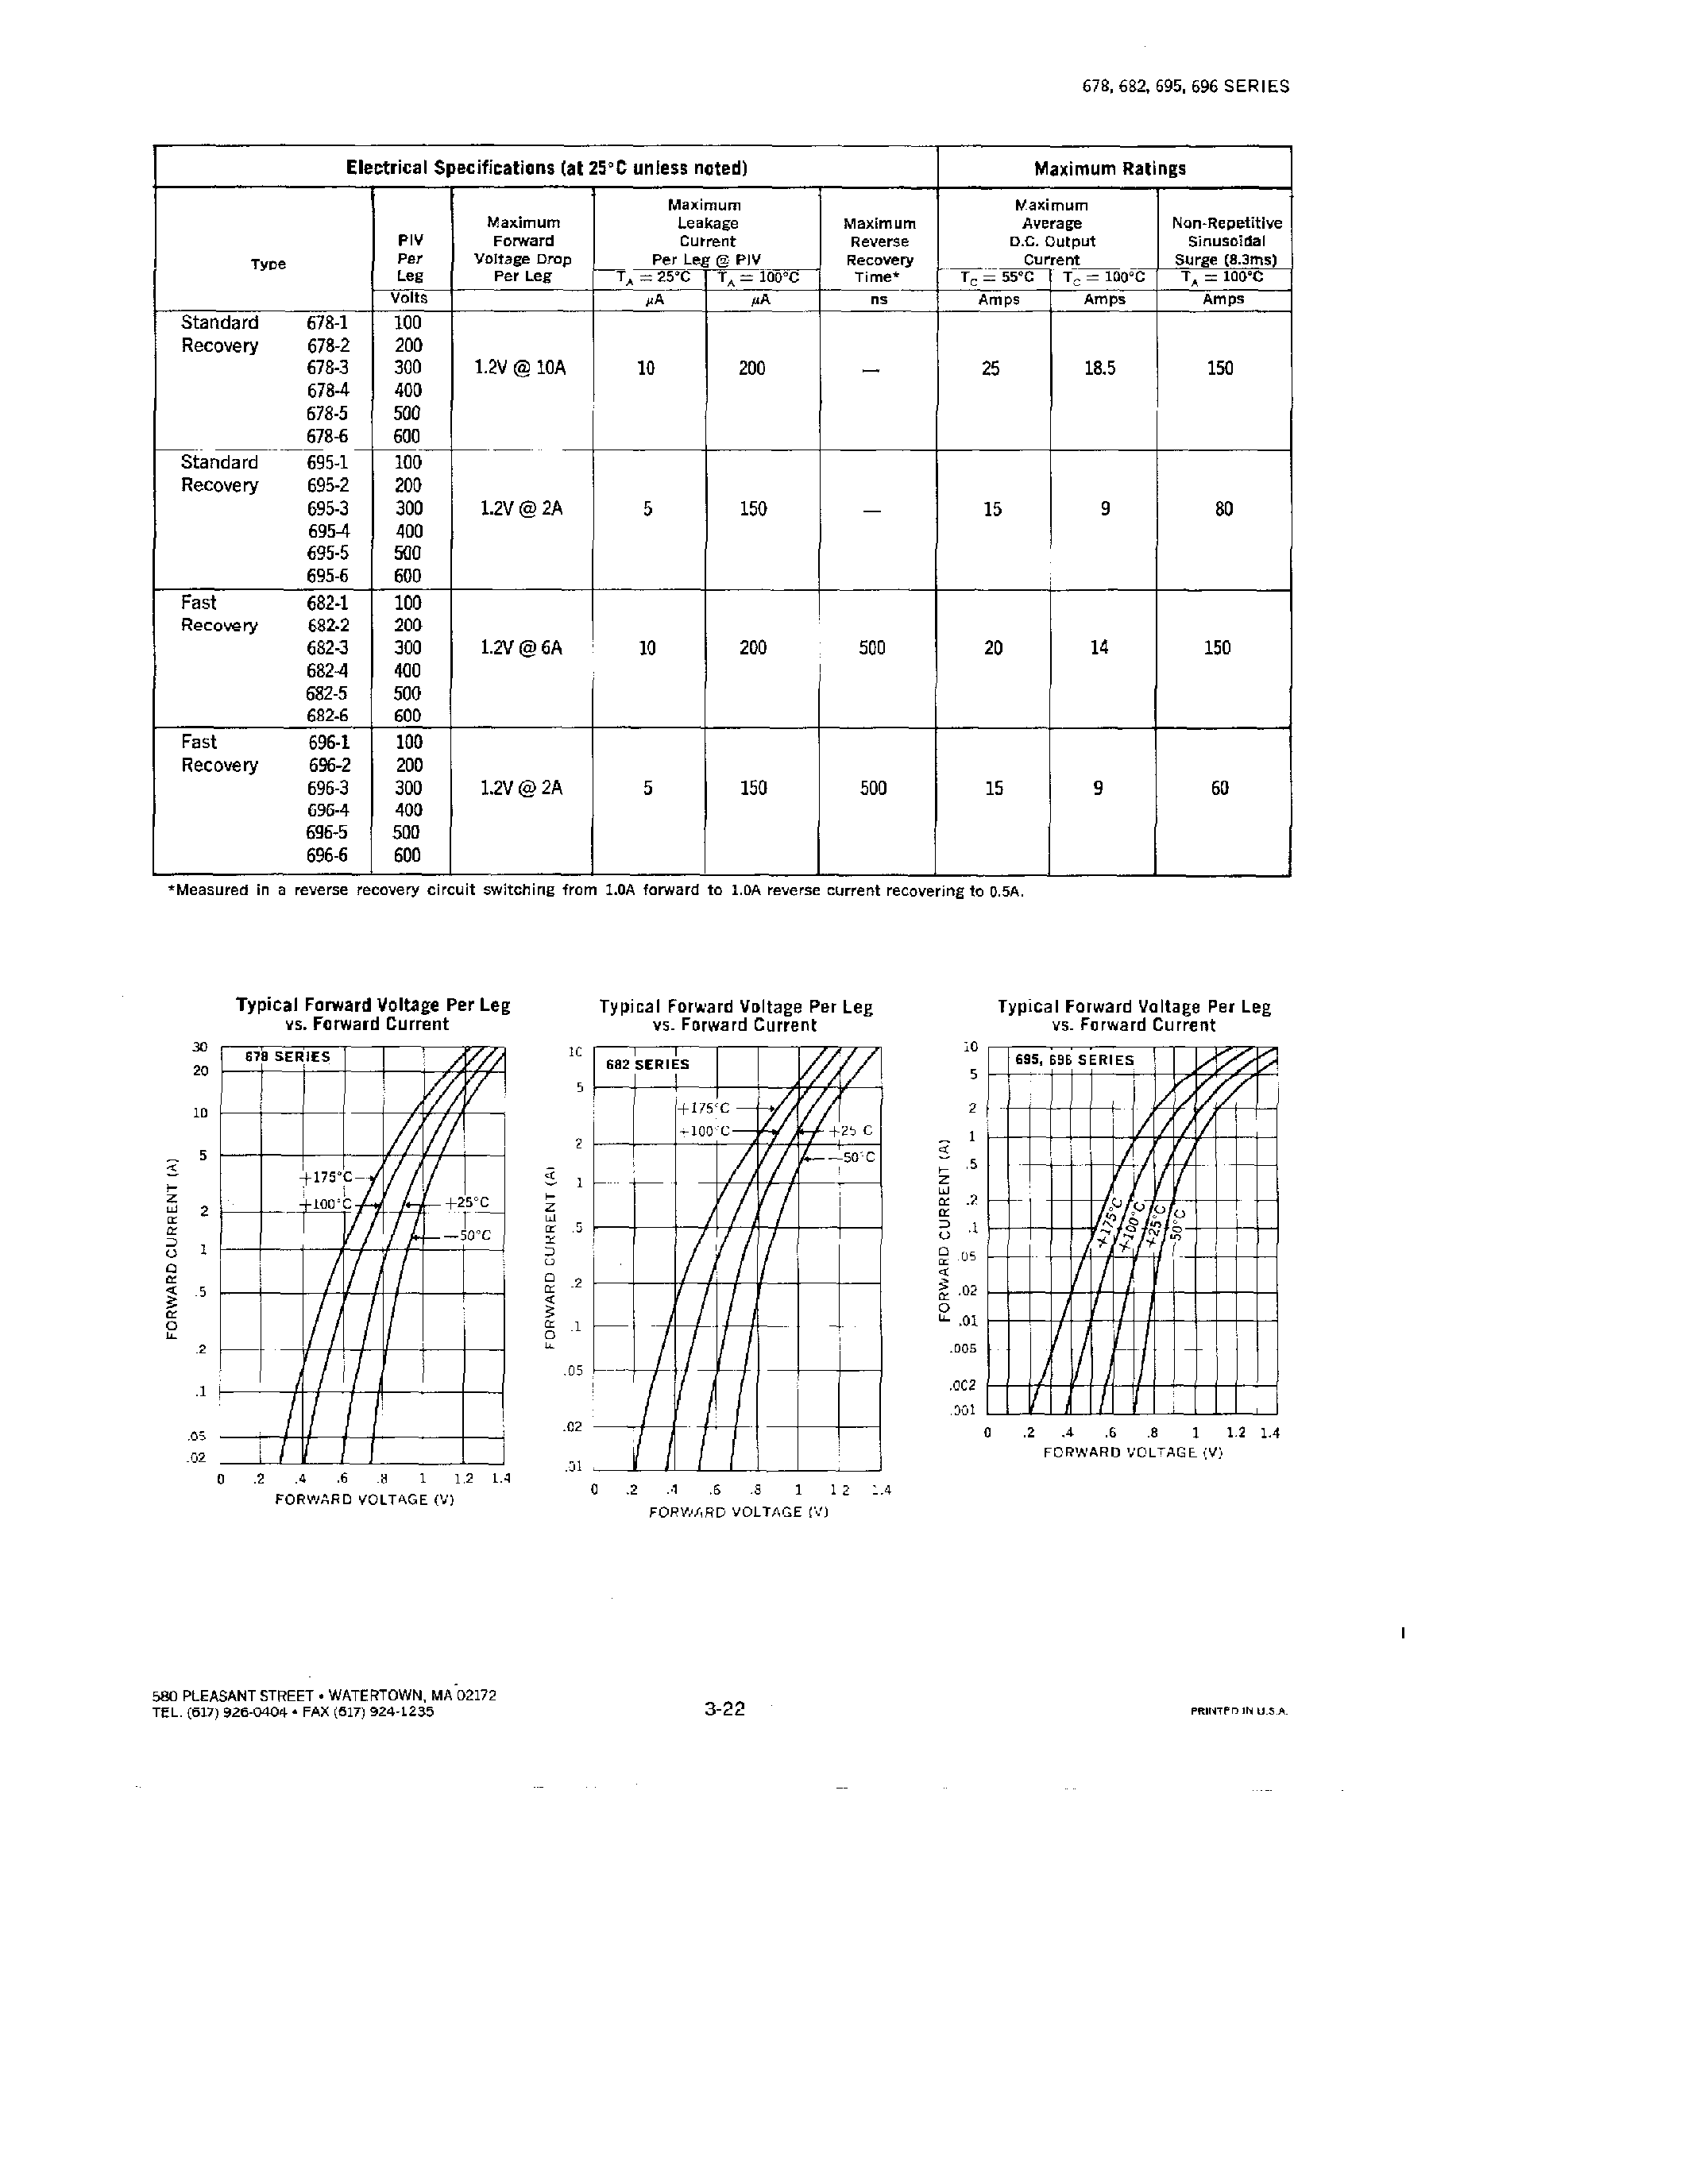 Datasheet 696-6 - RECTIFIERS ASSEMBLIES page 2